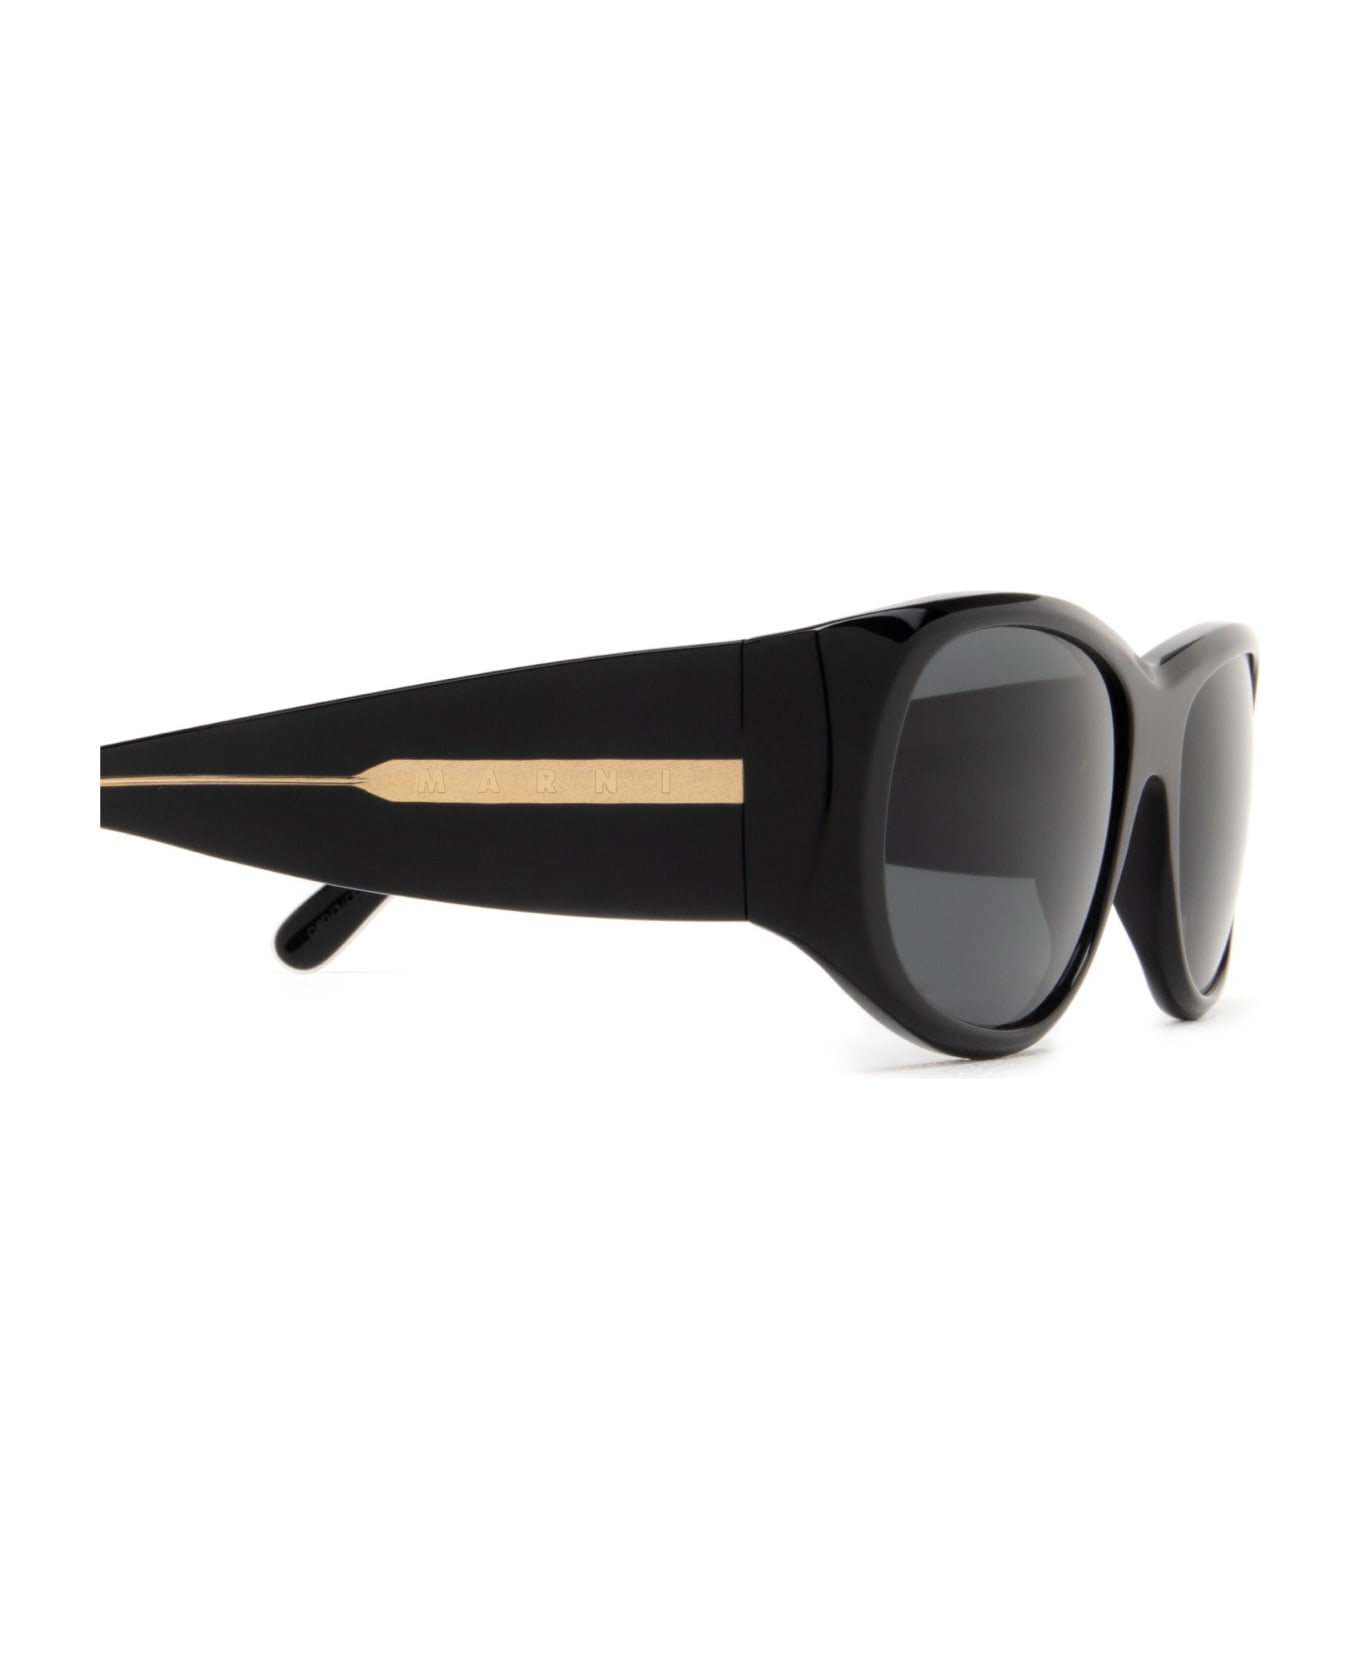 Marni Eyewear Orinoco River Black Sunglasses - Black サングラス